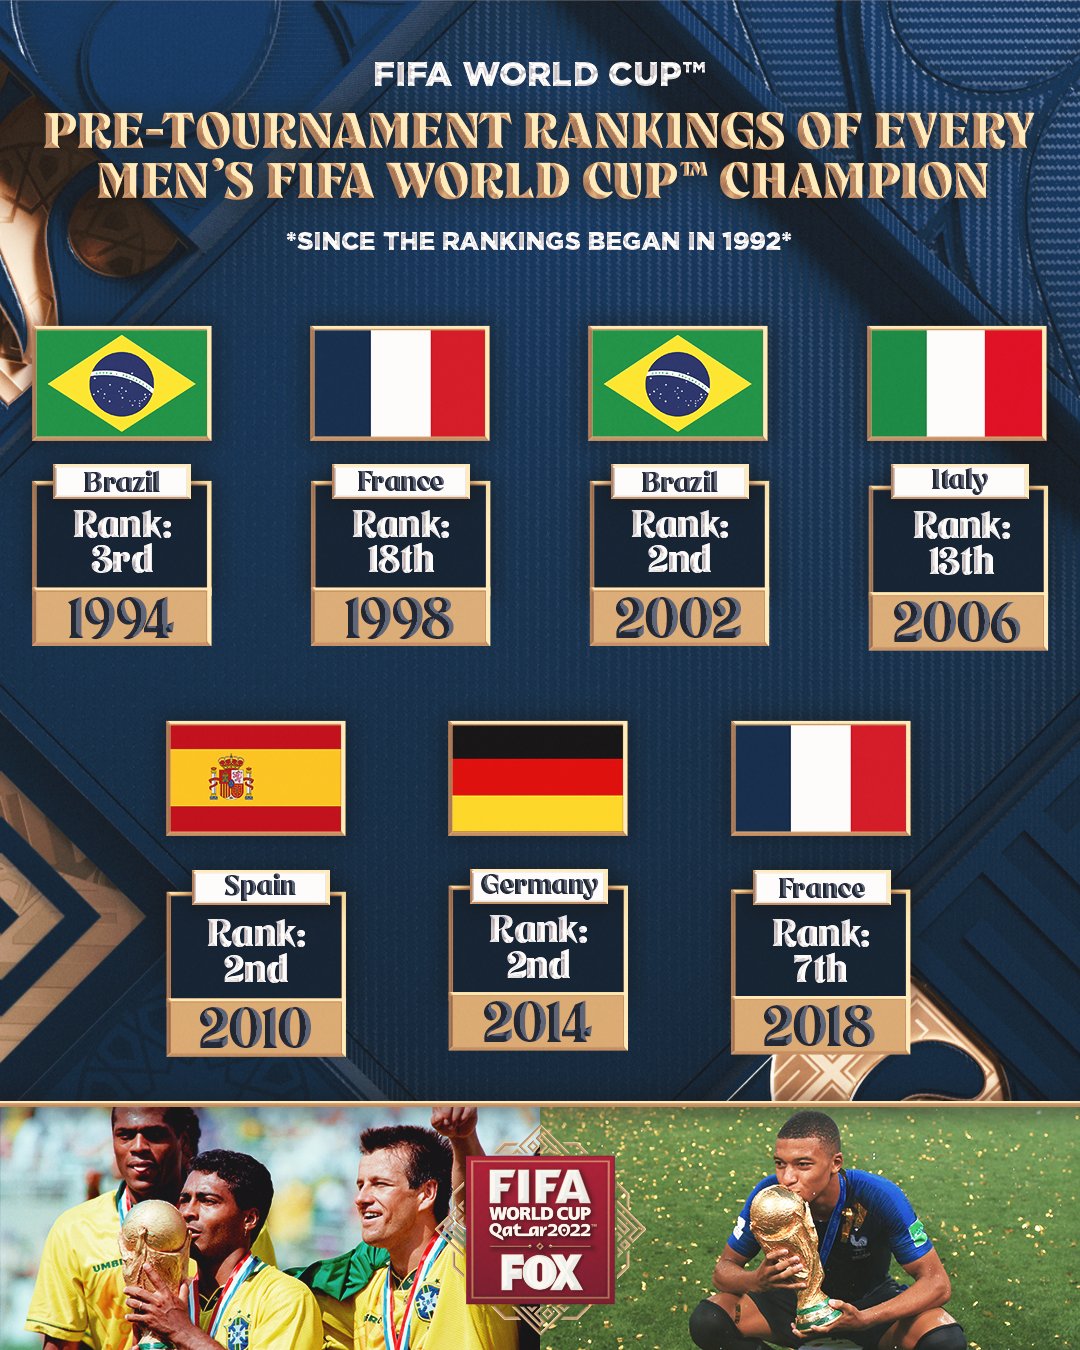 All FIFA World Cup Winners. 